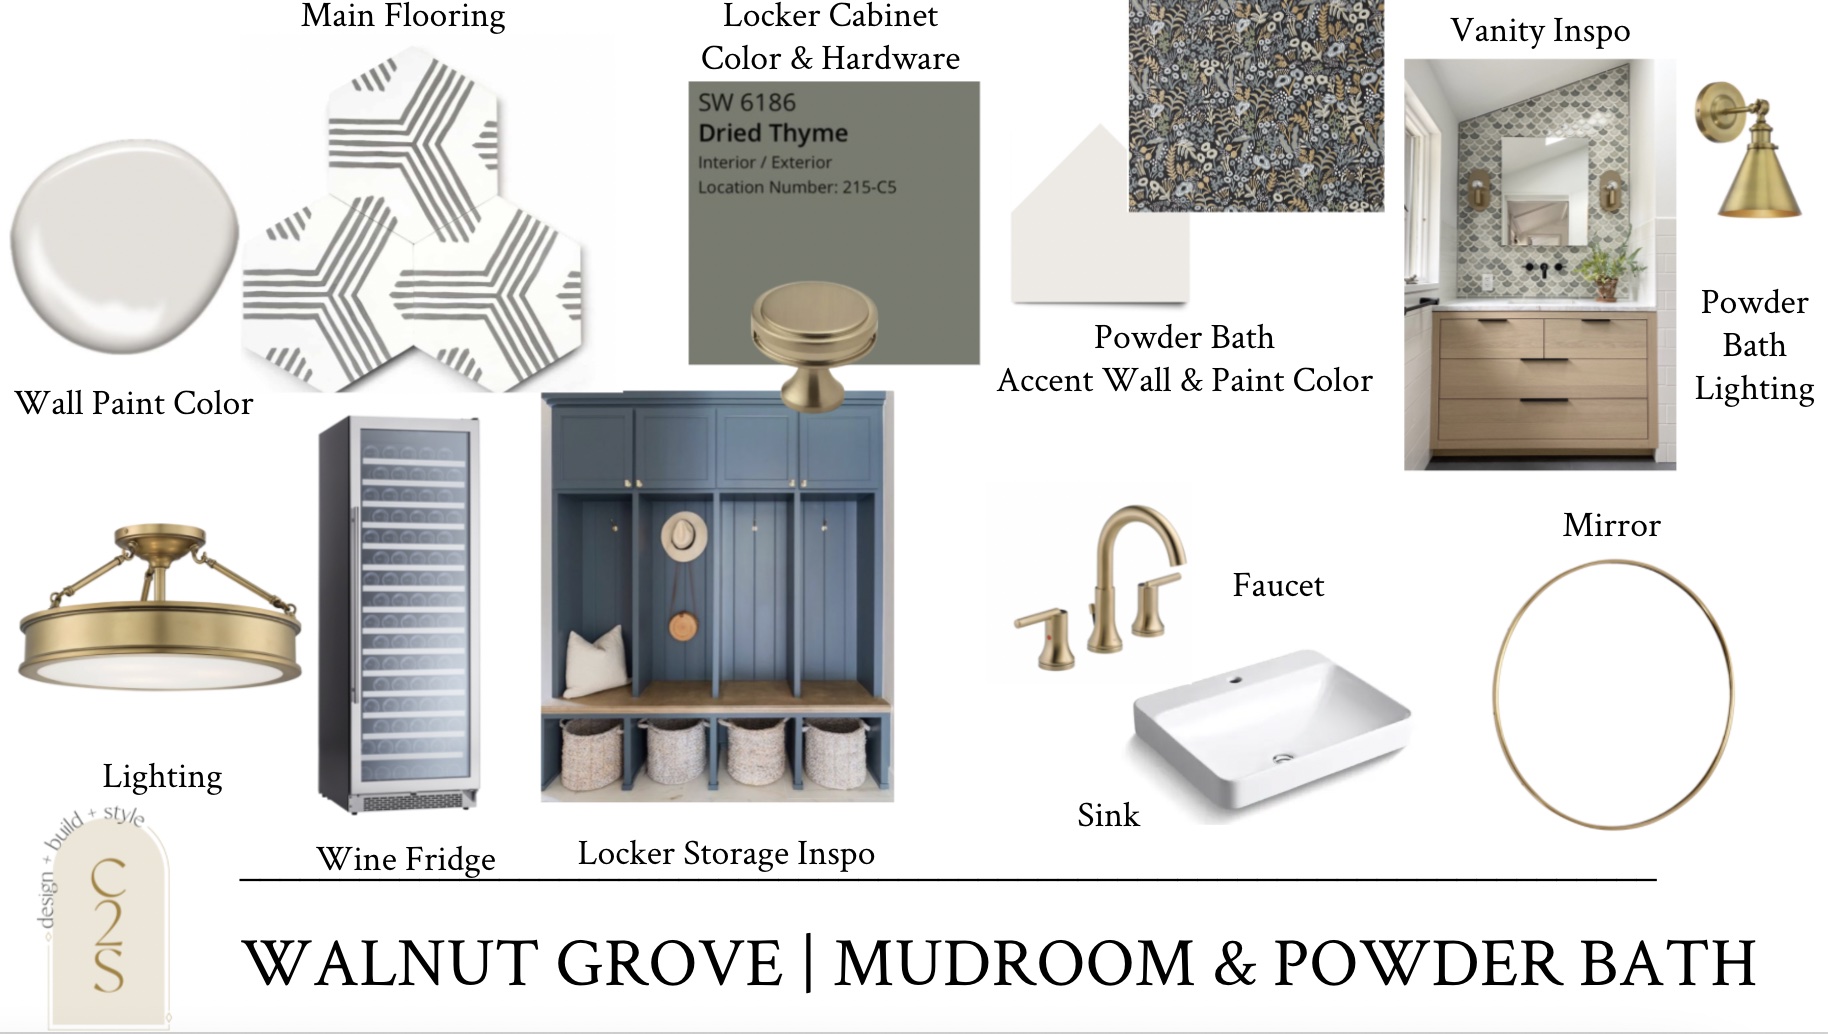 Walnut Grove Home | Design